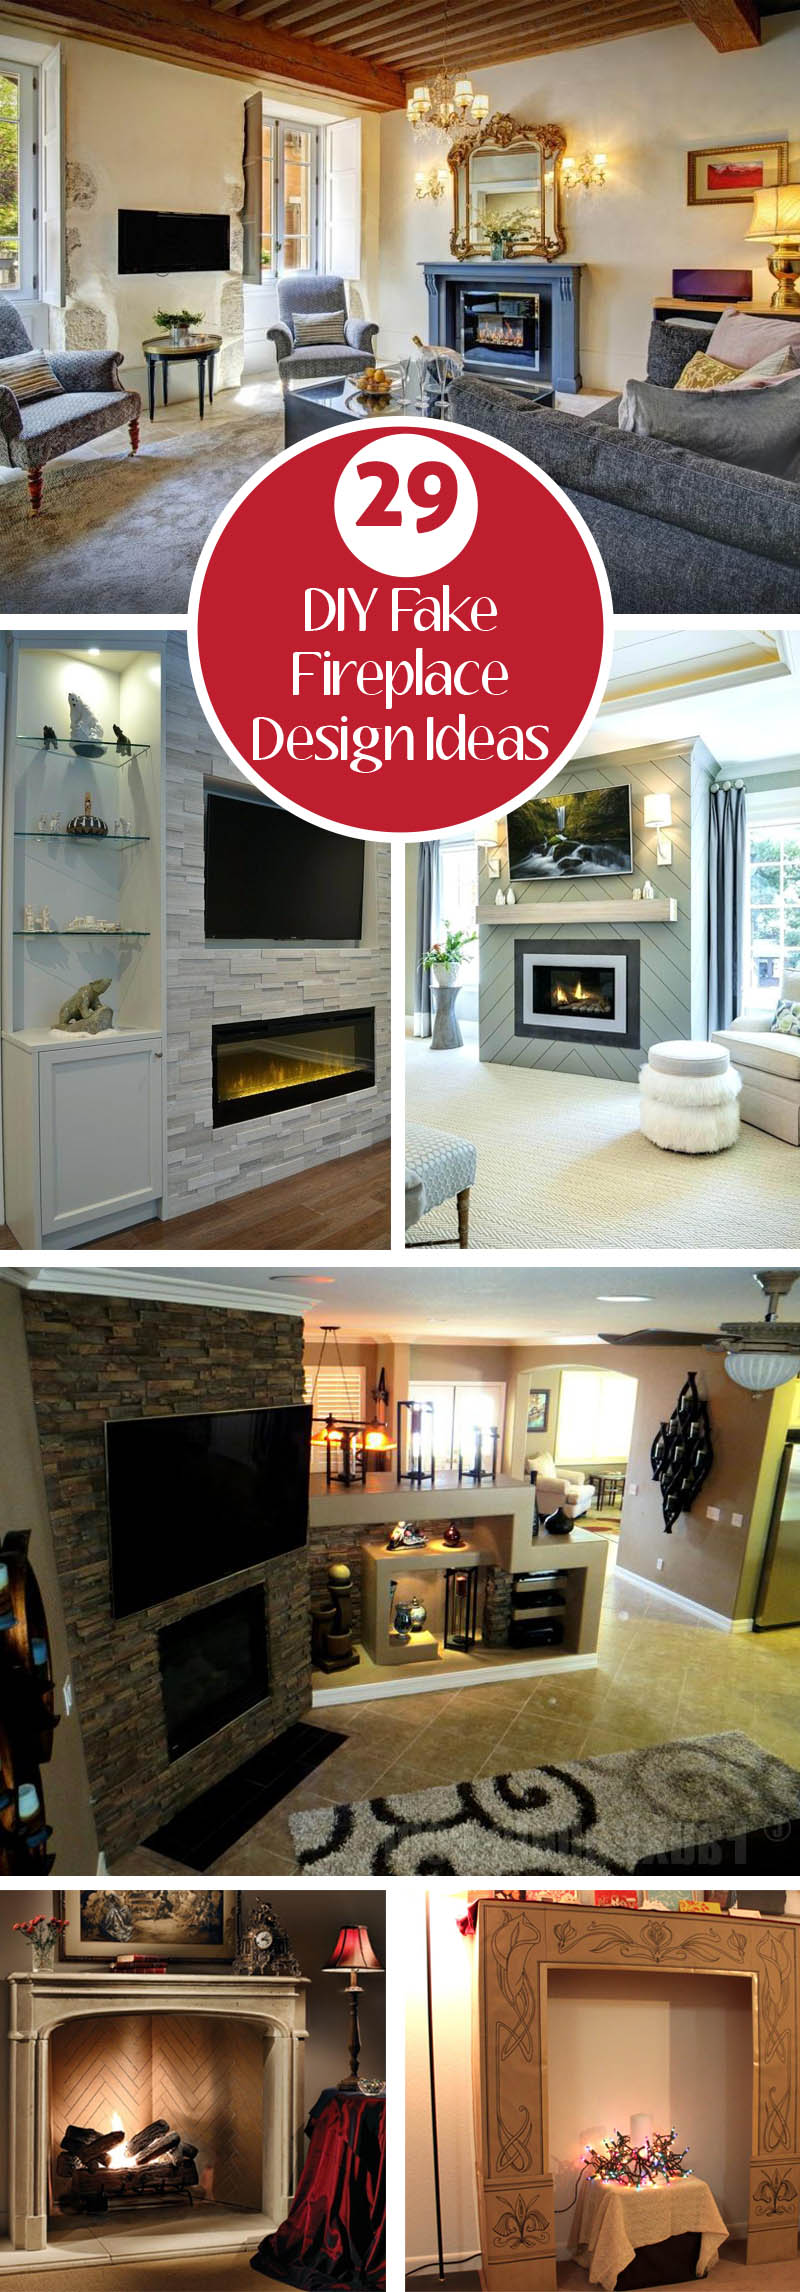 diy fake fireplace design ideas